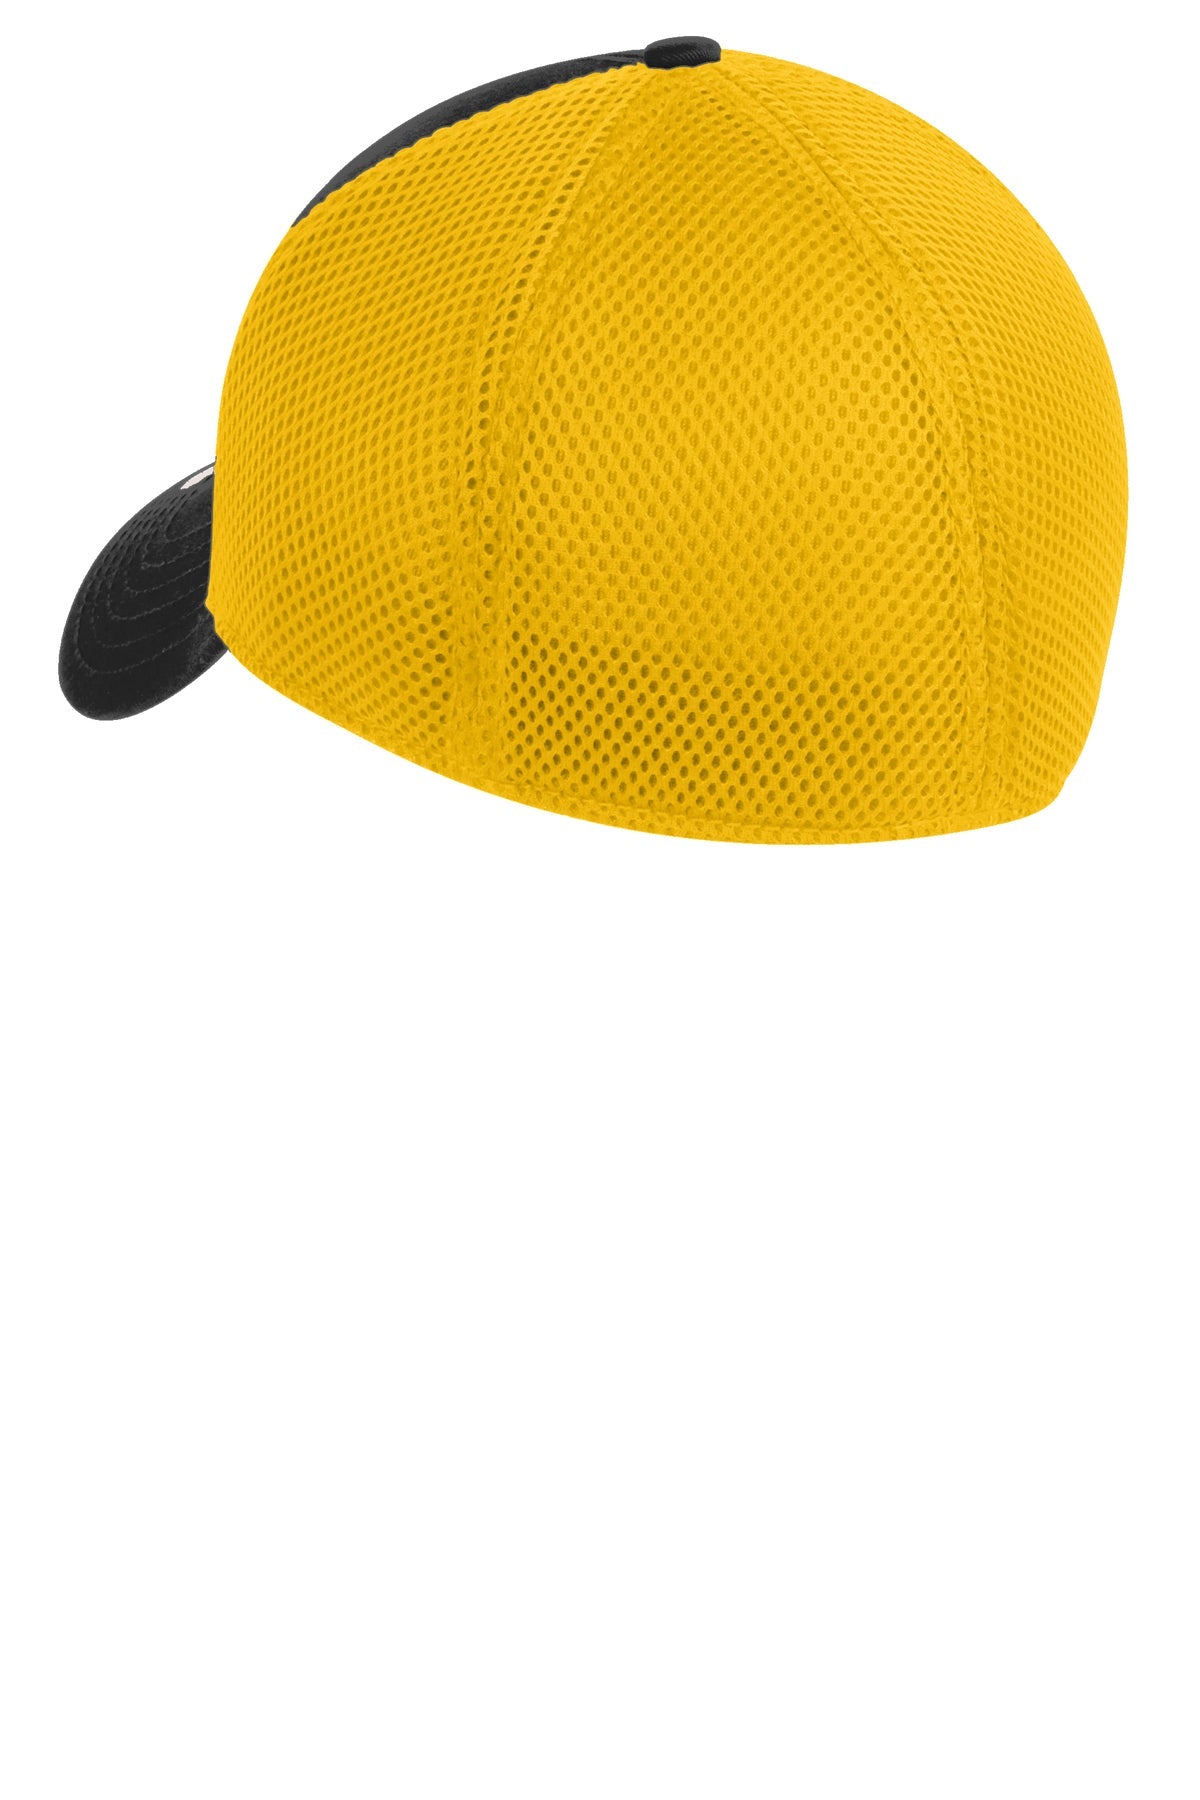 New Era Stretch Mesh Customized Caps, Black/Gold